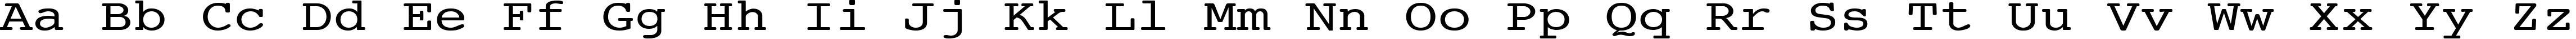 Пример написания английского алфавита шрифтом NTCourierVK Normal120n